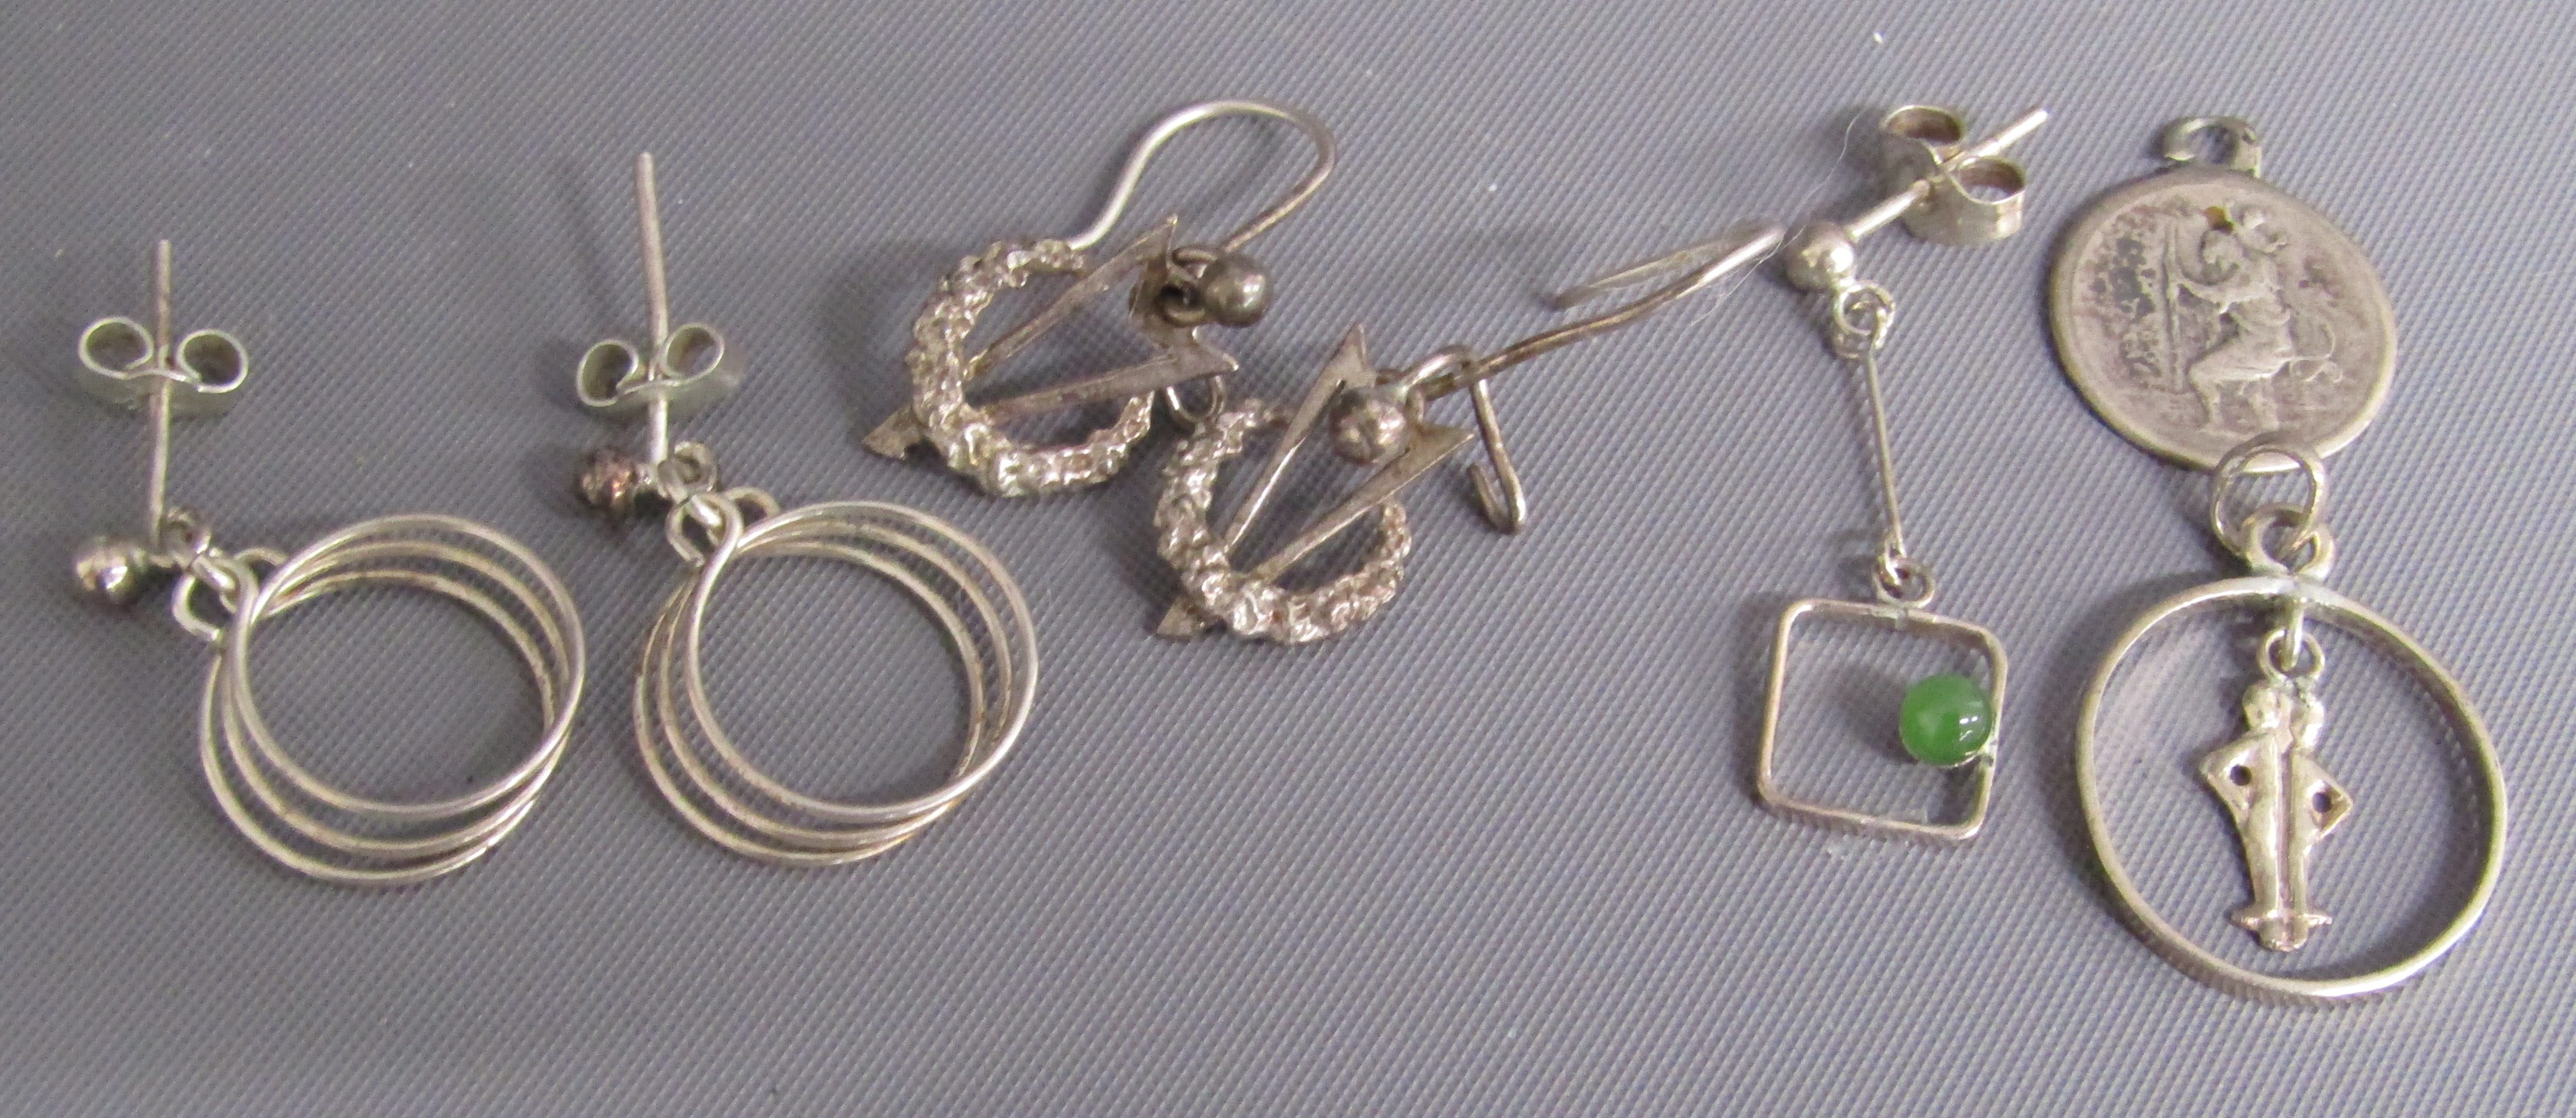 H.J Darracott silver pocket watch, silver bracelet with Paris pendant, silver ingot with white metal - Image 2 of 8